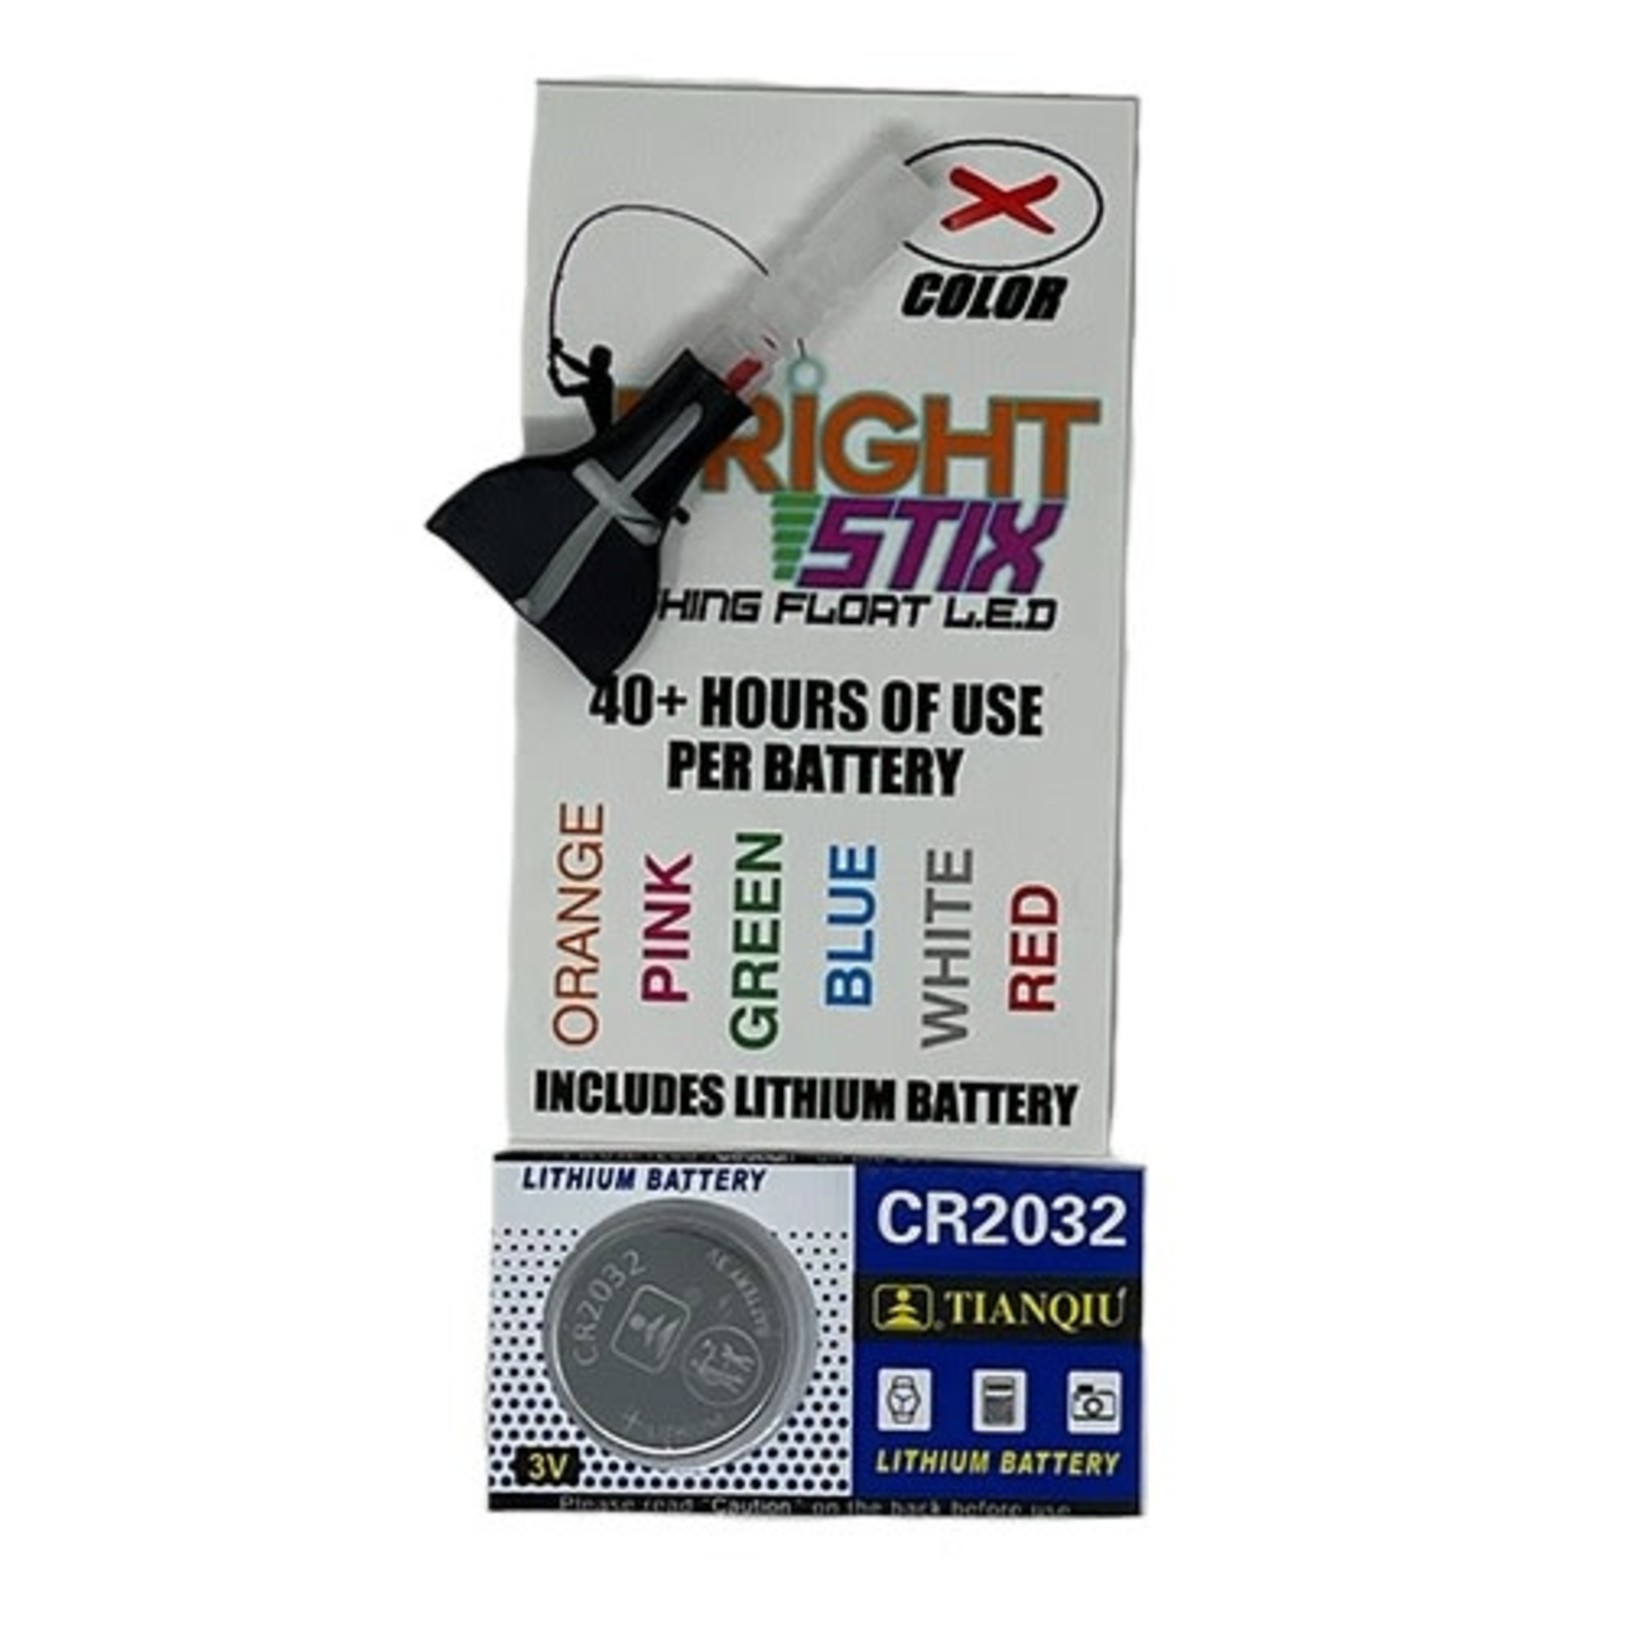 Bright Stix Bright Stix - LED Light Stick with Battery